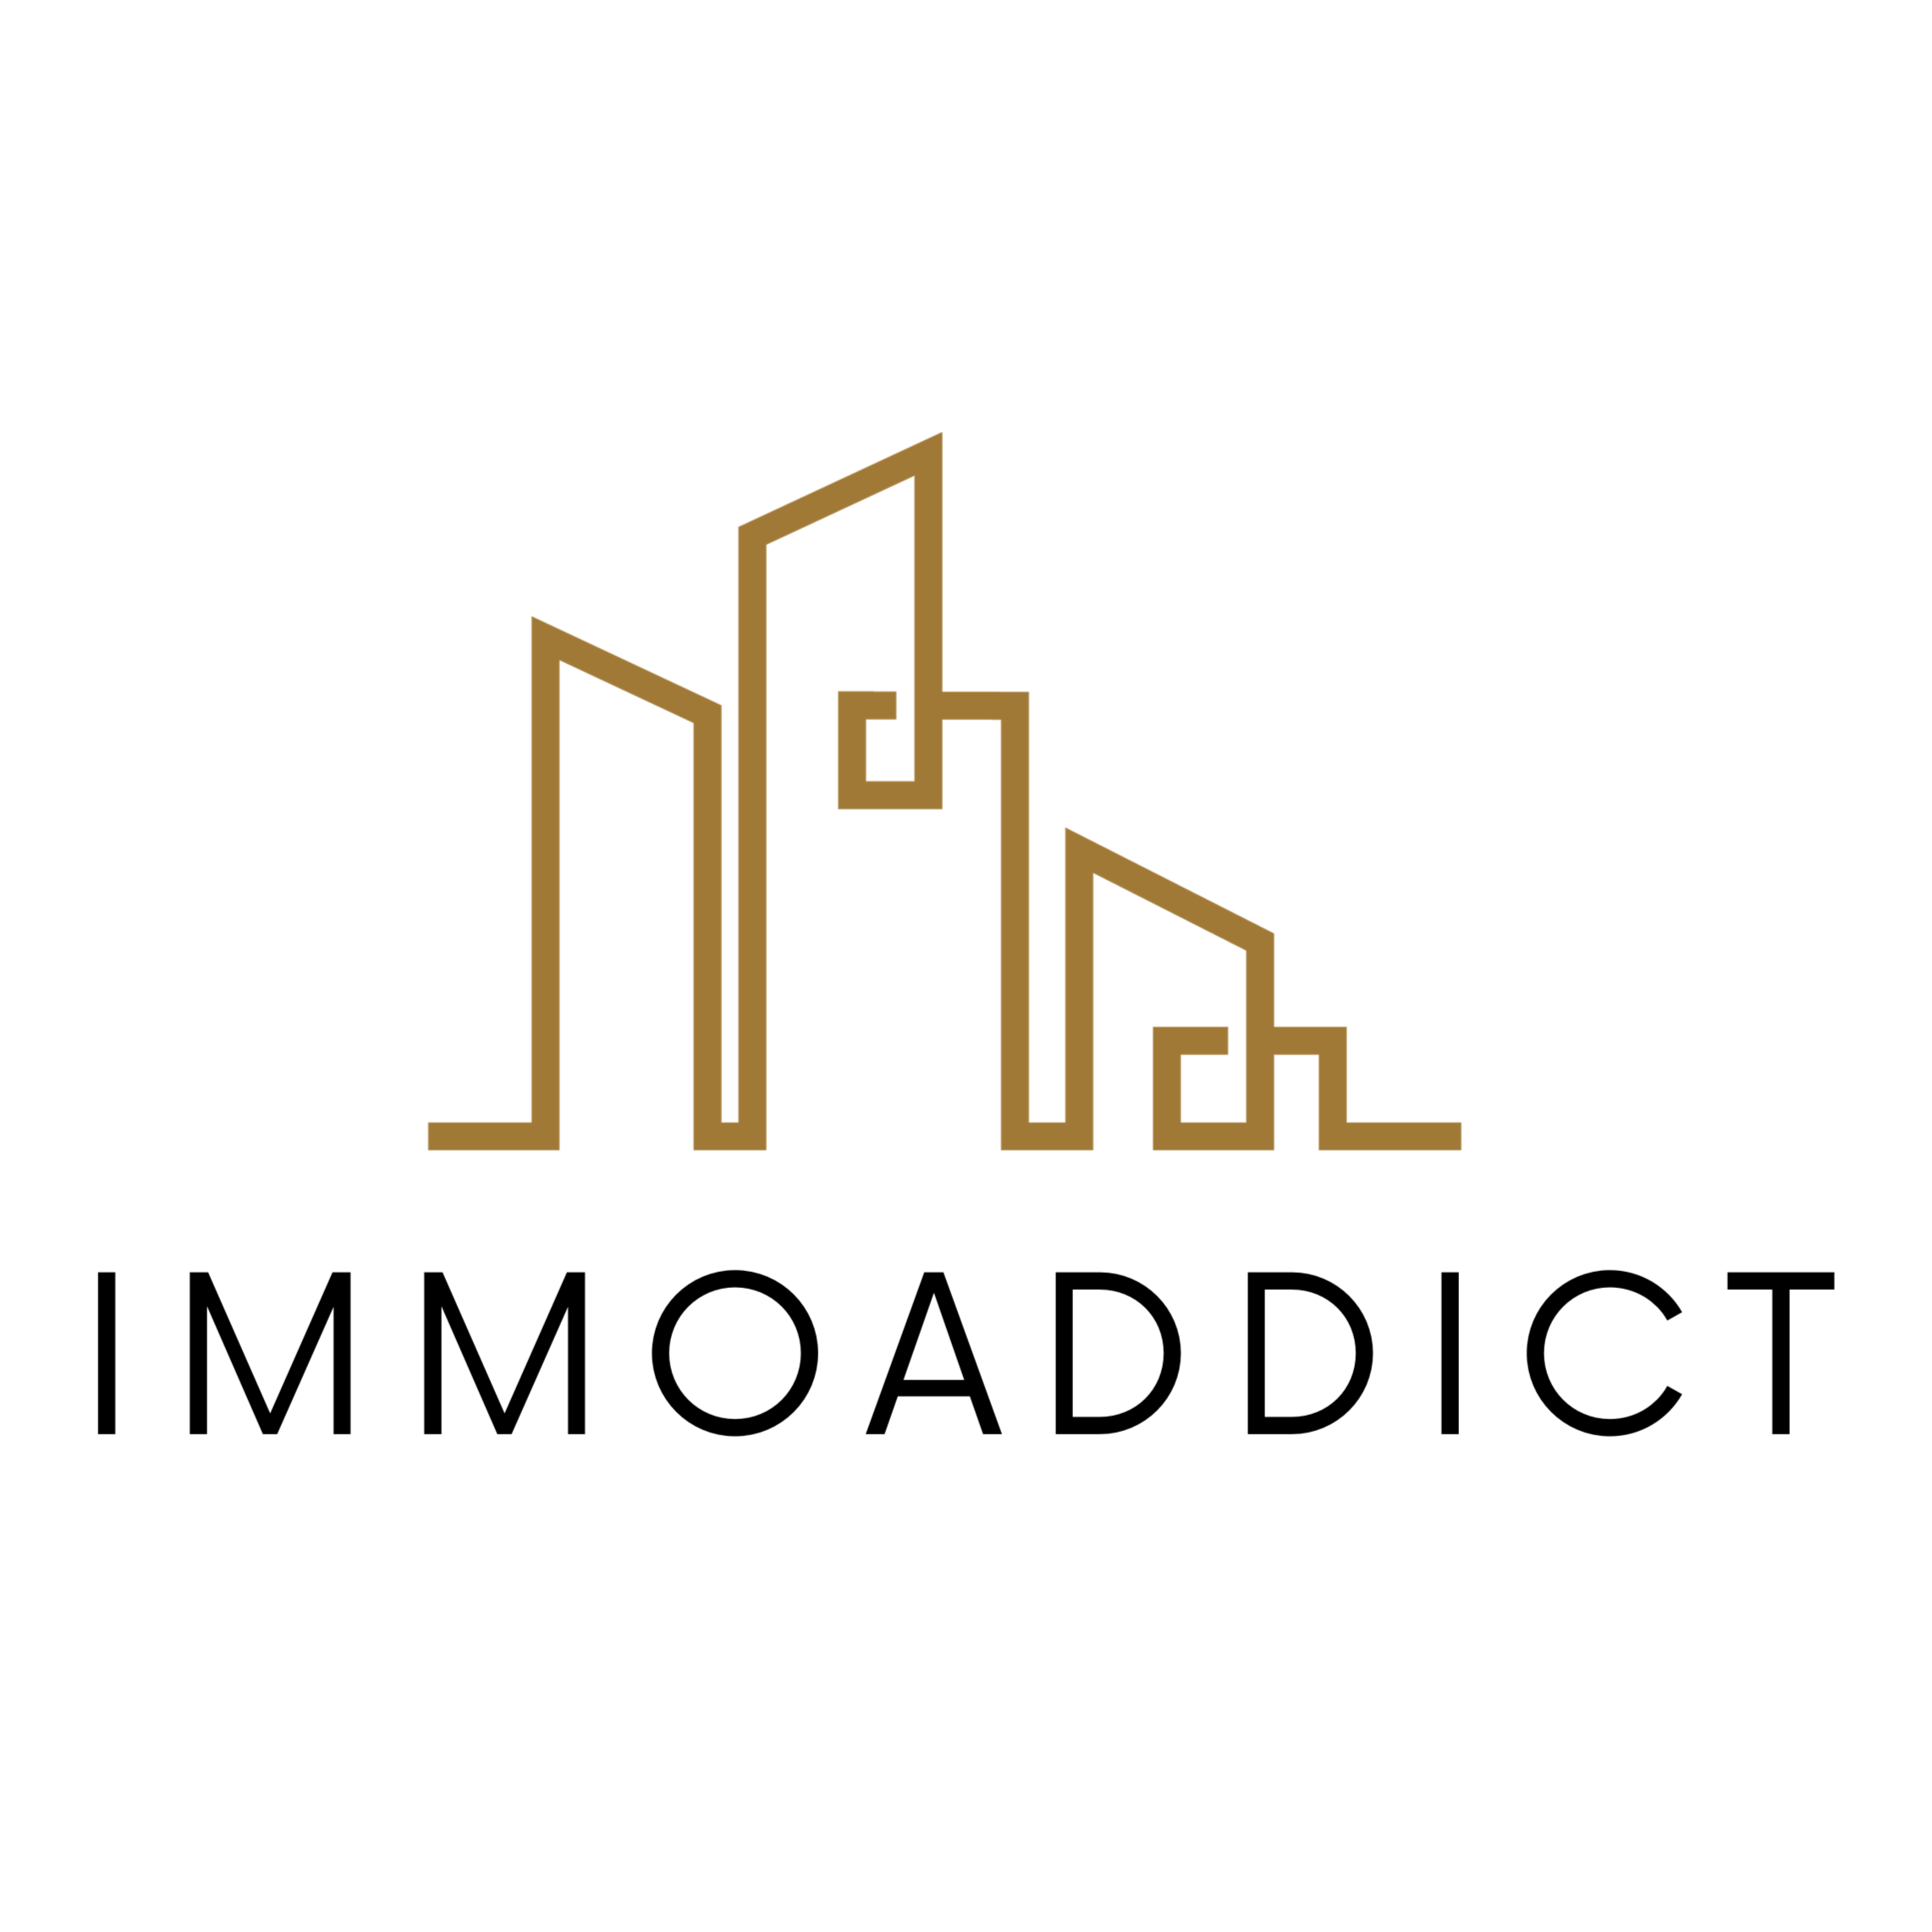 IMMOADDICT Logo